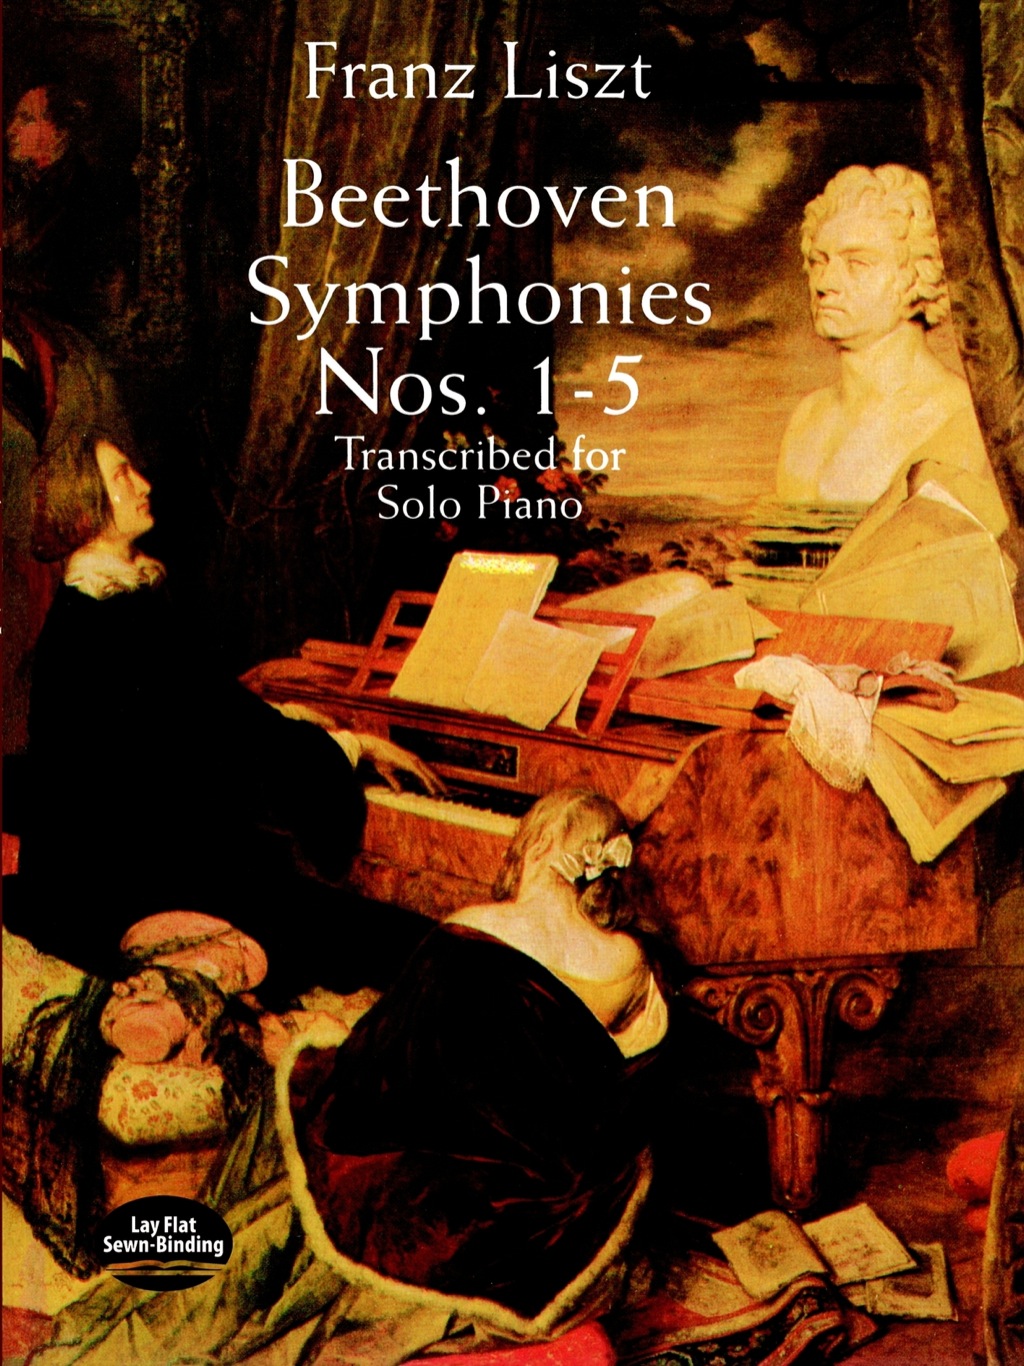 Beethoven Symphonies Nos. 1-5 Transcribed for Solo Piano (eBook) - Franz Liszt,